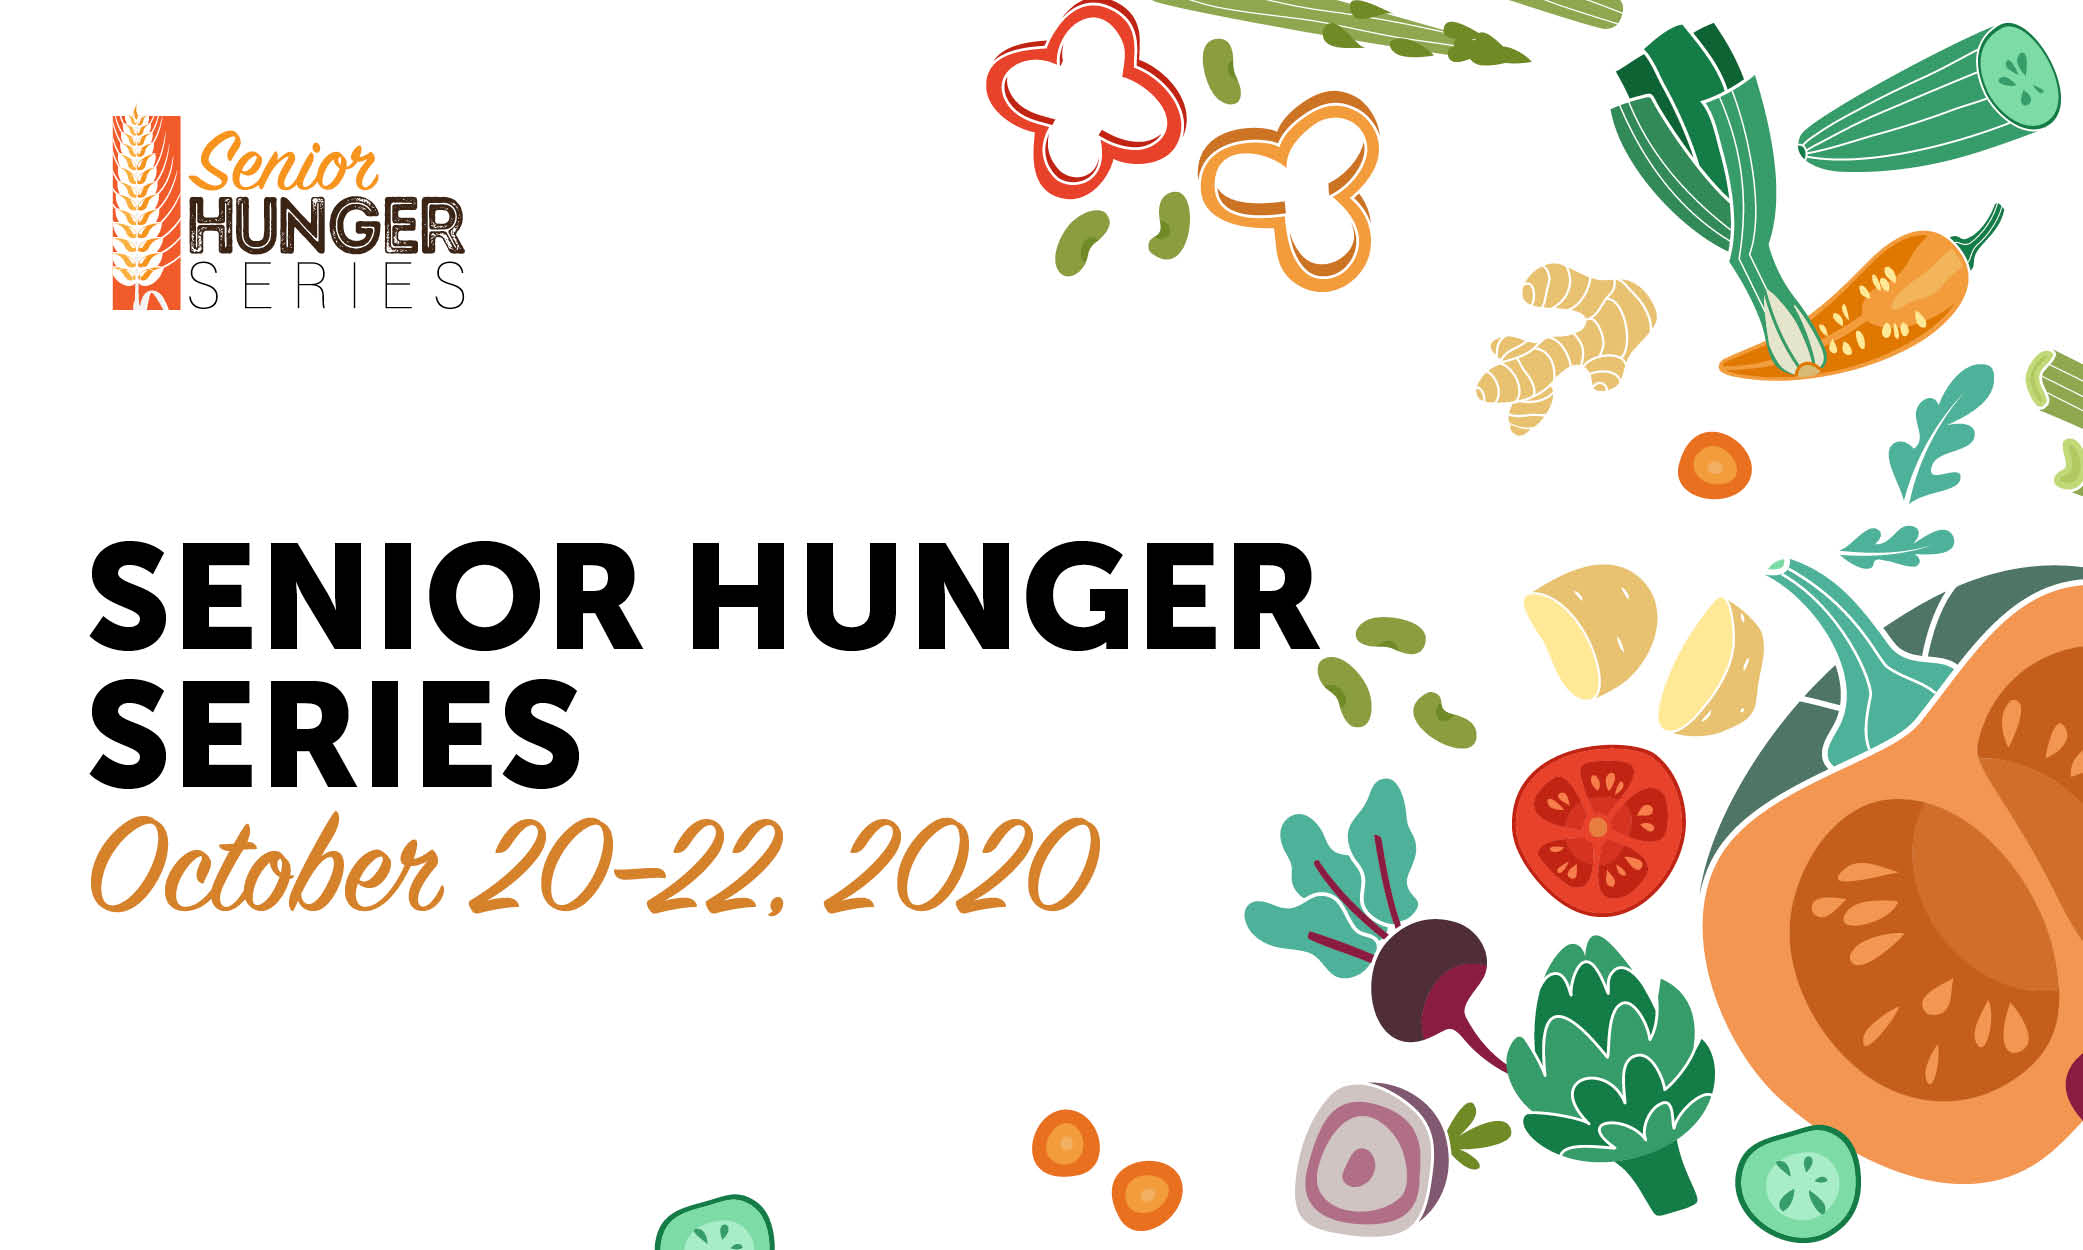 Promotion for 2020 Senior Hunger Series event